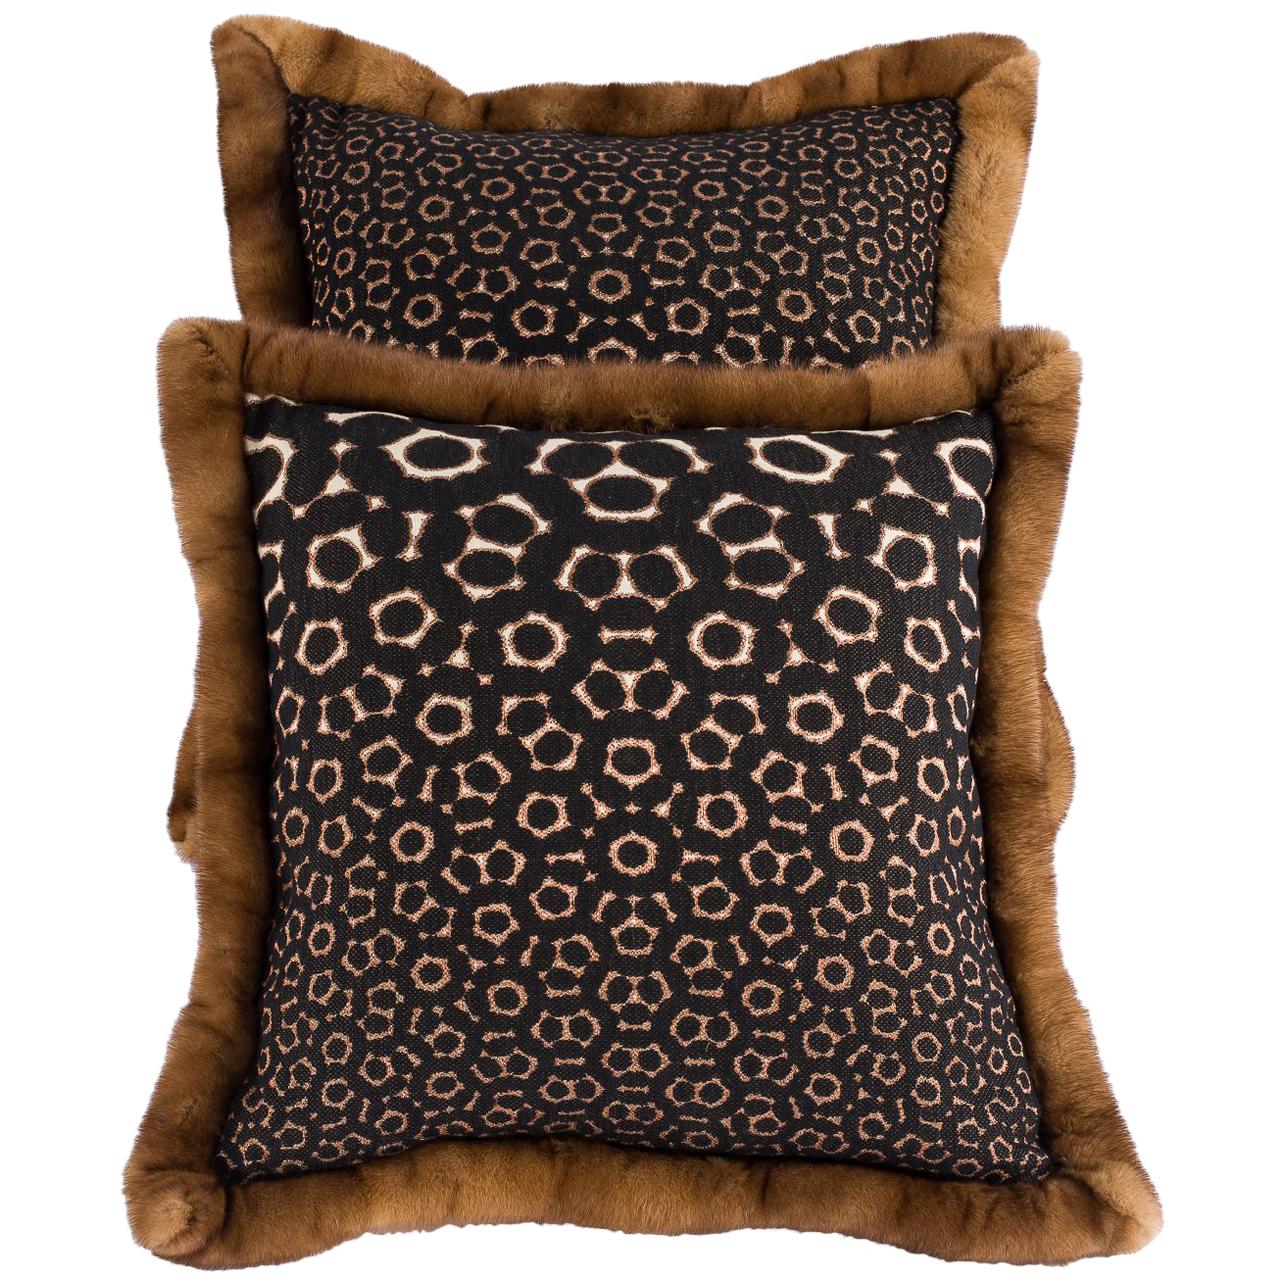 Pair of Pillows with Golden Mink Fur Border, Boussac Fabric